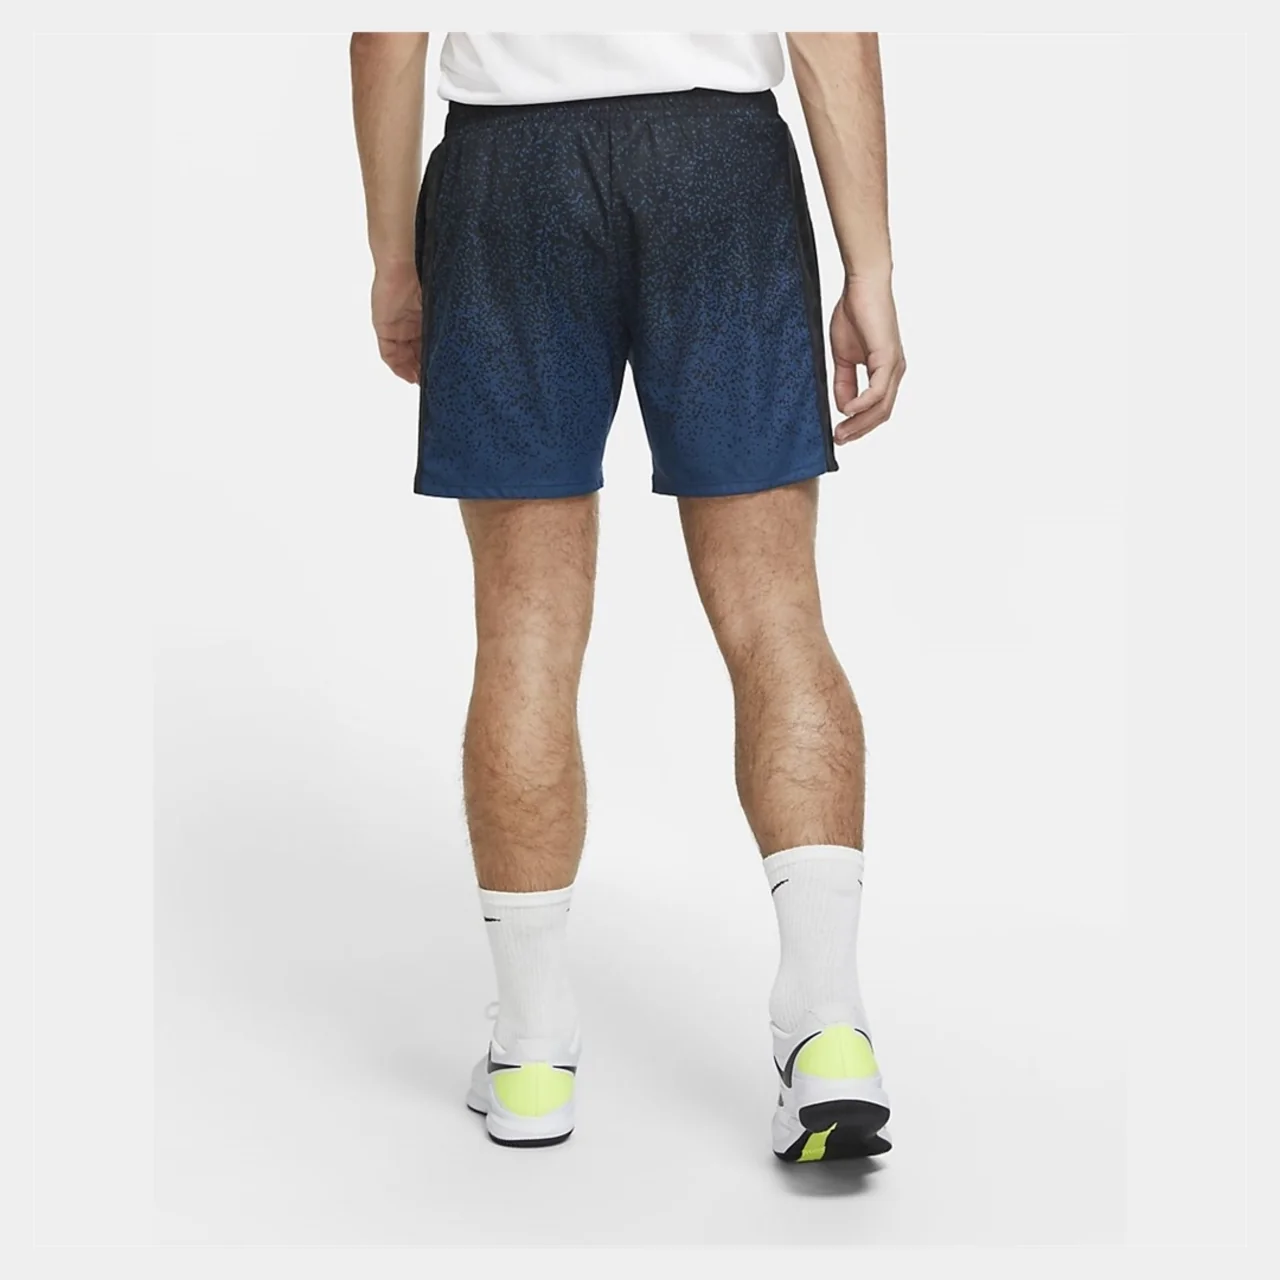 Nike Rafa Tennis Shorts